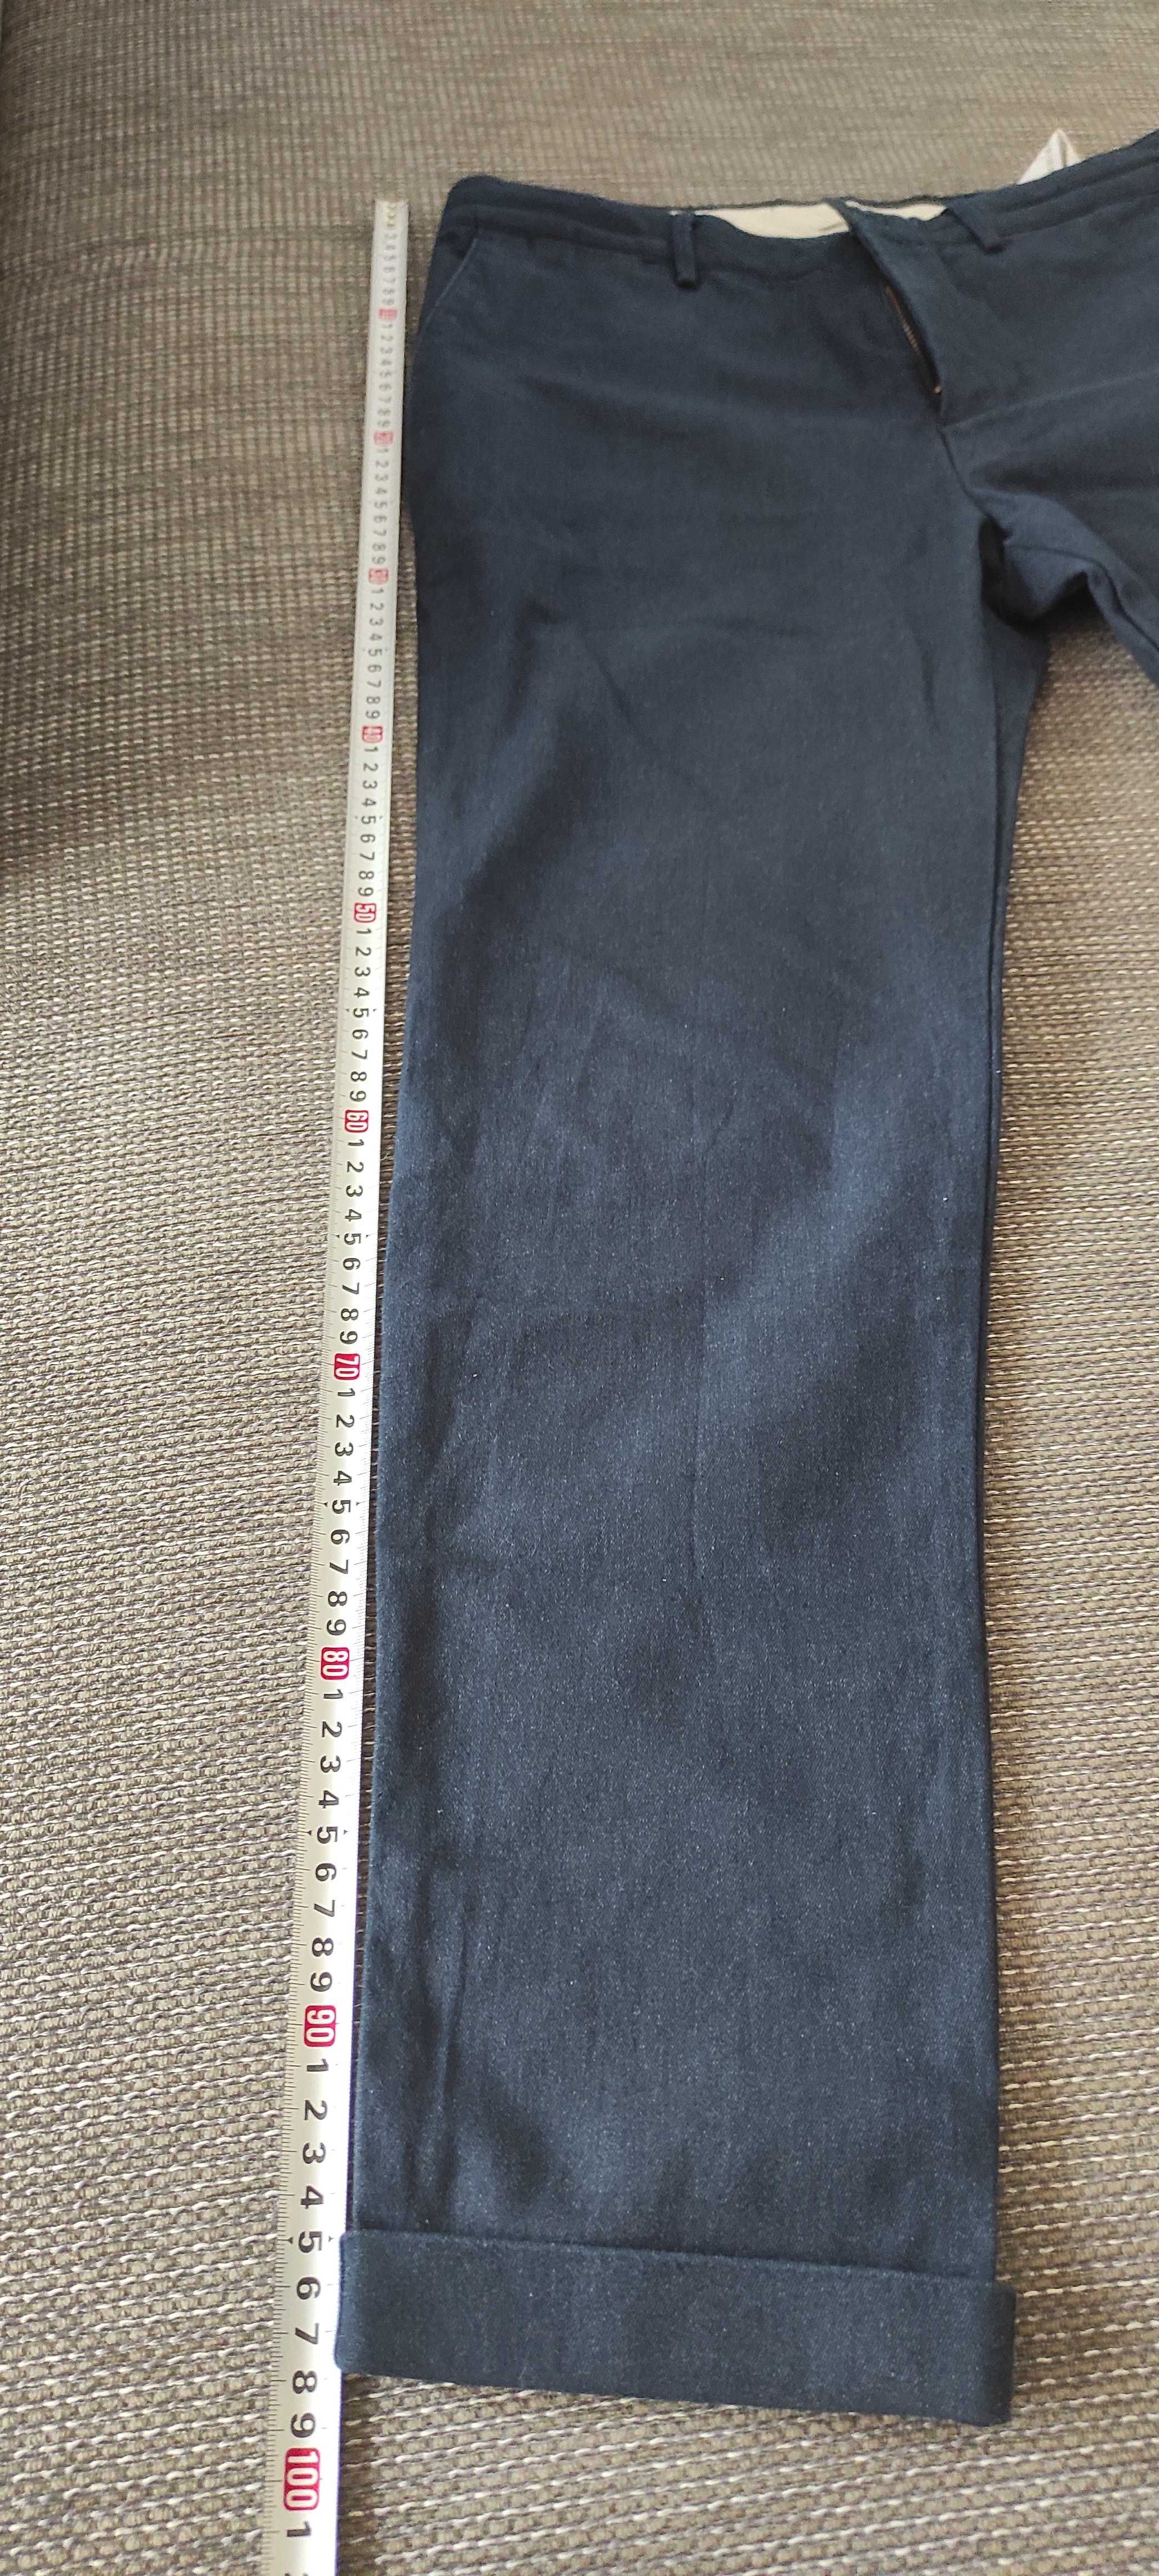 Панталон Zara 32/32 размер